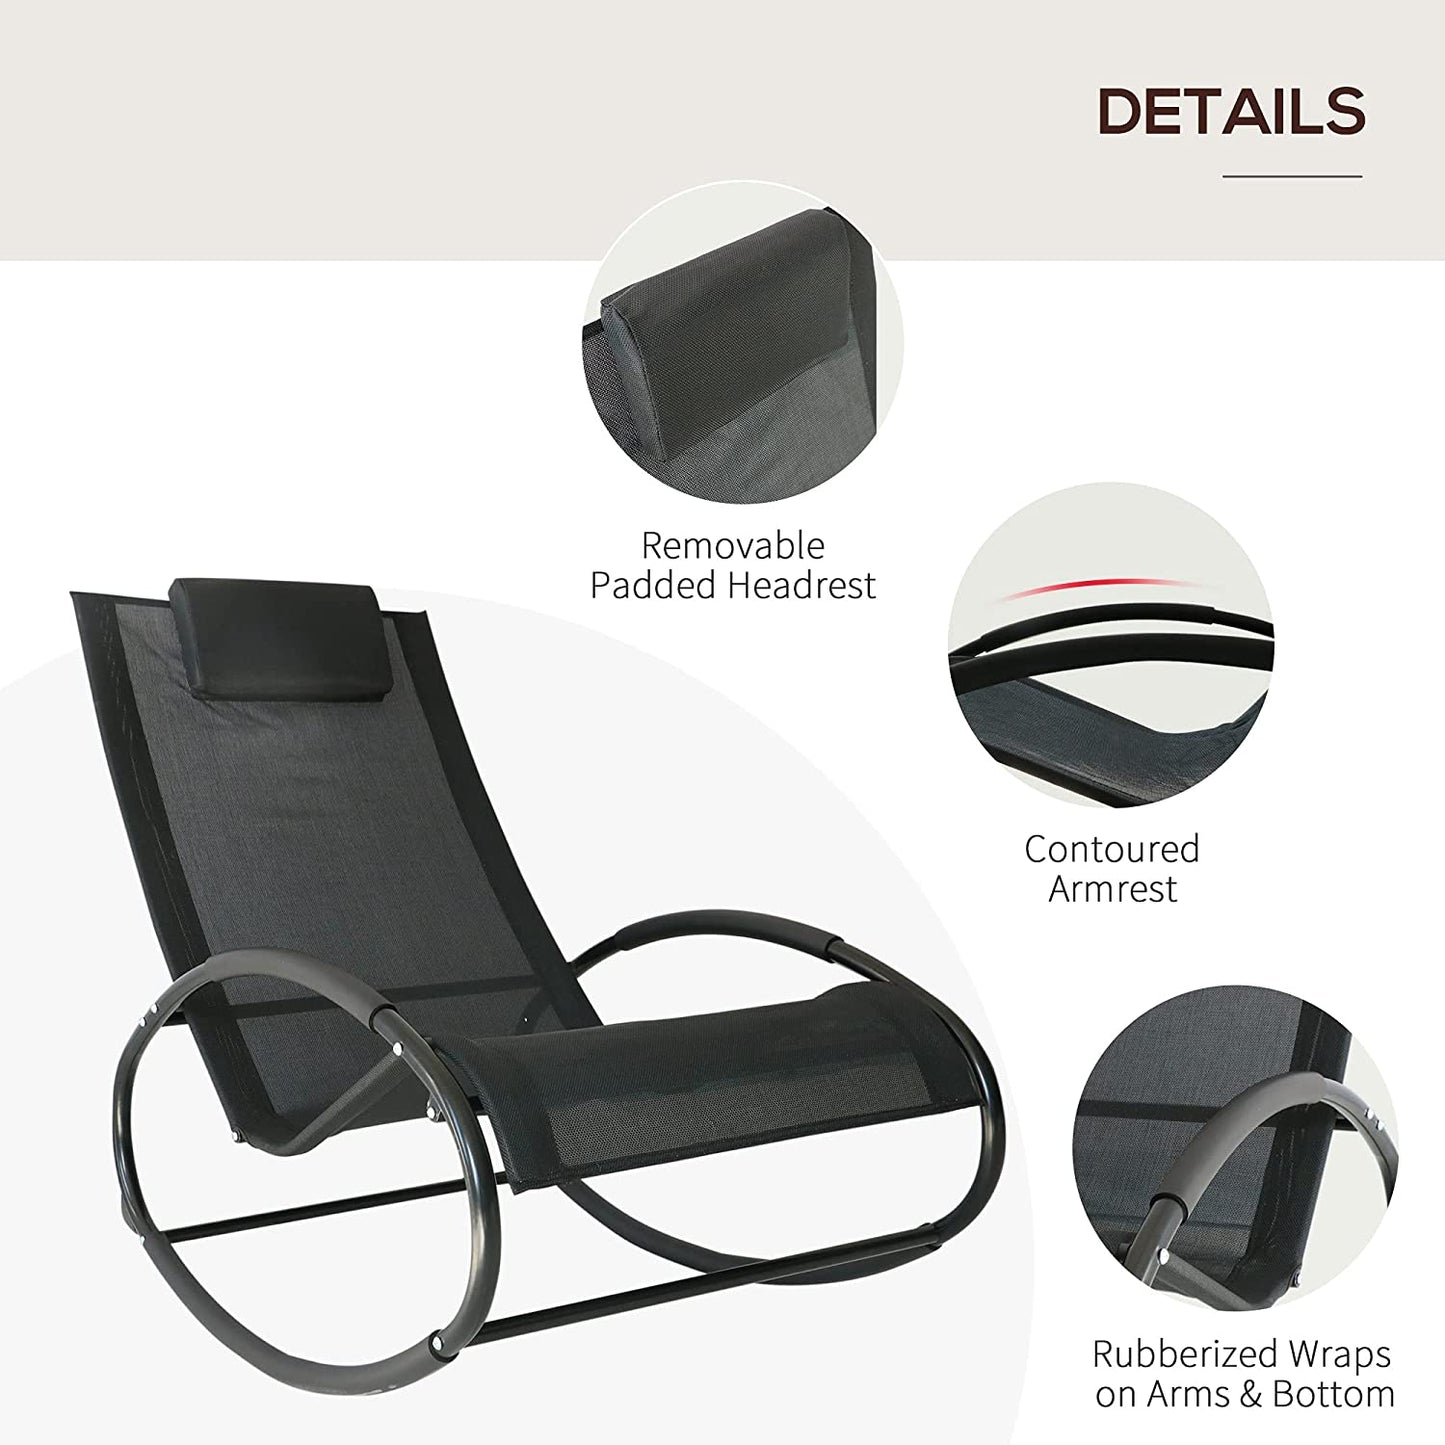 Outsunny Orbital Zero Gravity Rocking Chair, 105Lx62Wx88H cm,Texteline-Black